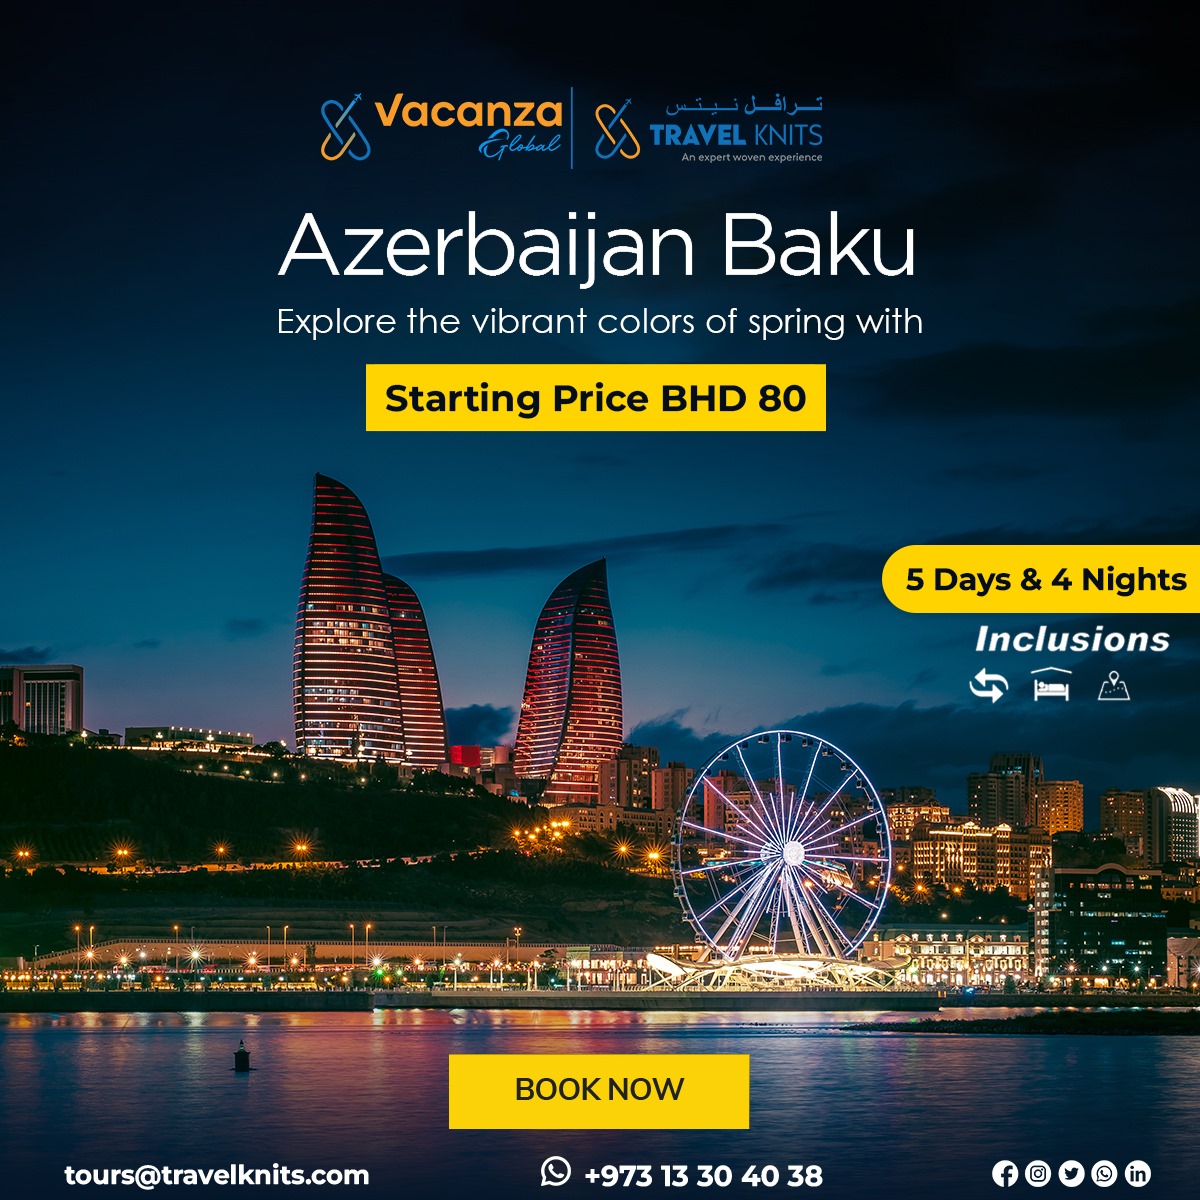 AZERBAIJAN  TRIP|AzerbaijanTour Packages - Book honeymoon ,family,adventure tour packages to Azerbaijan|Travel Knits												